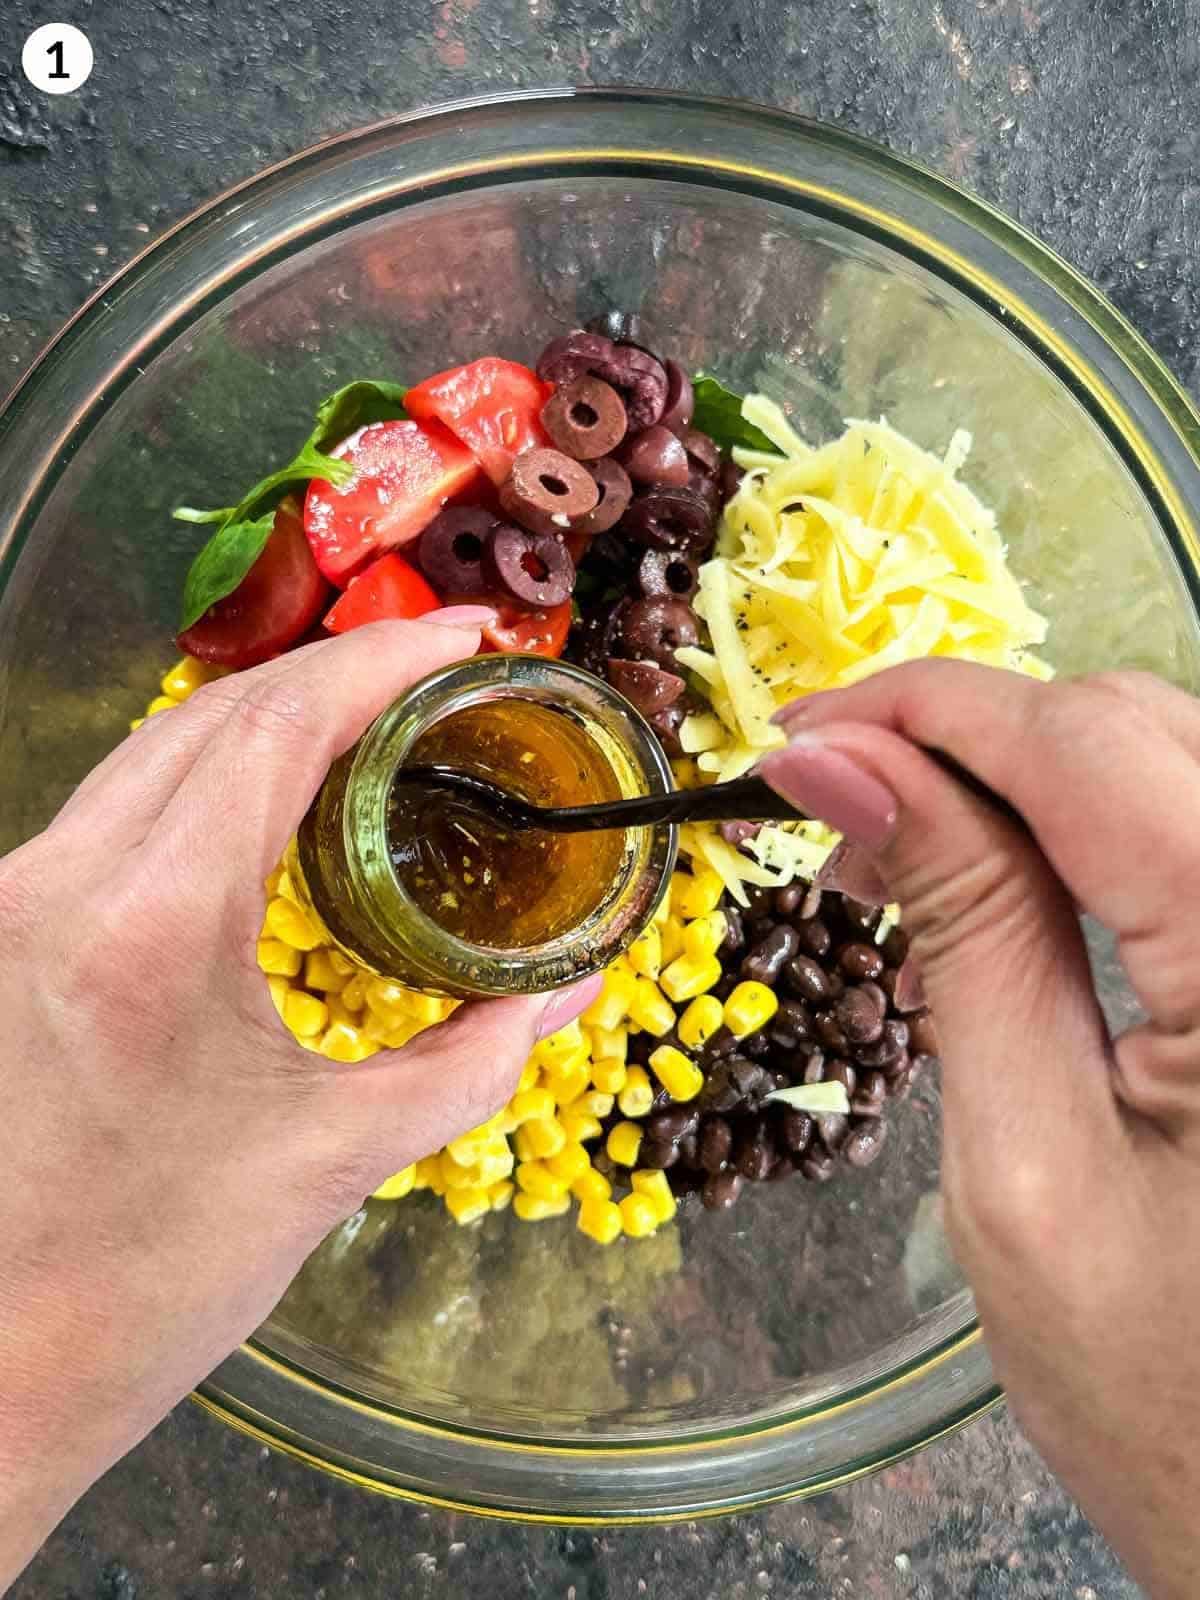 Pouring Santa Fe salad dressing into a mixing bowl of Santa Fe salad ingredients